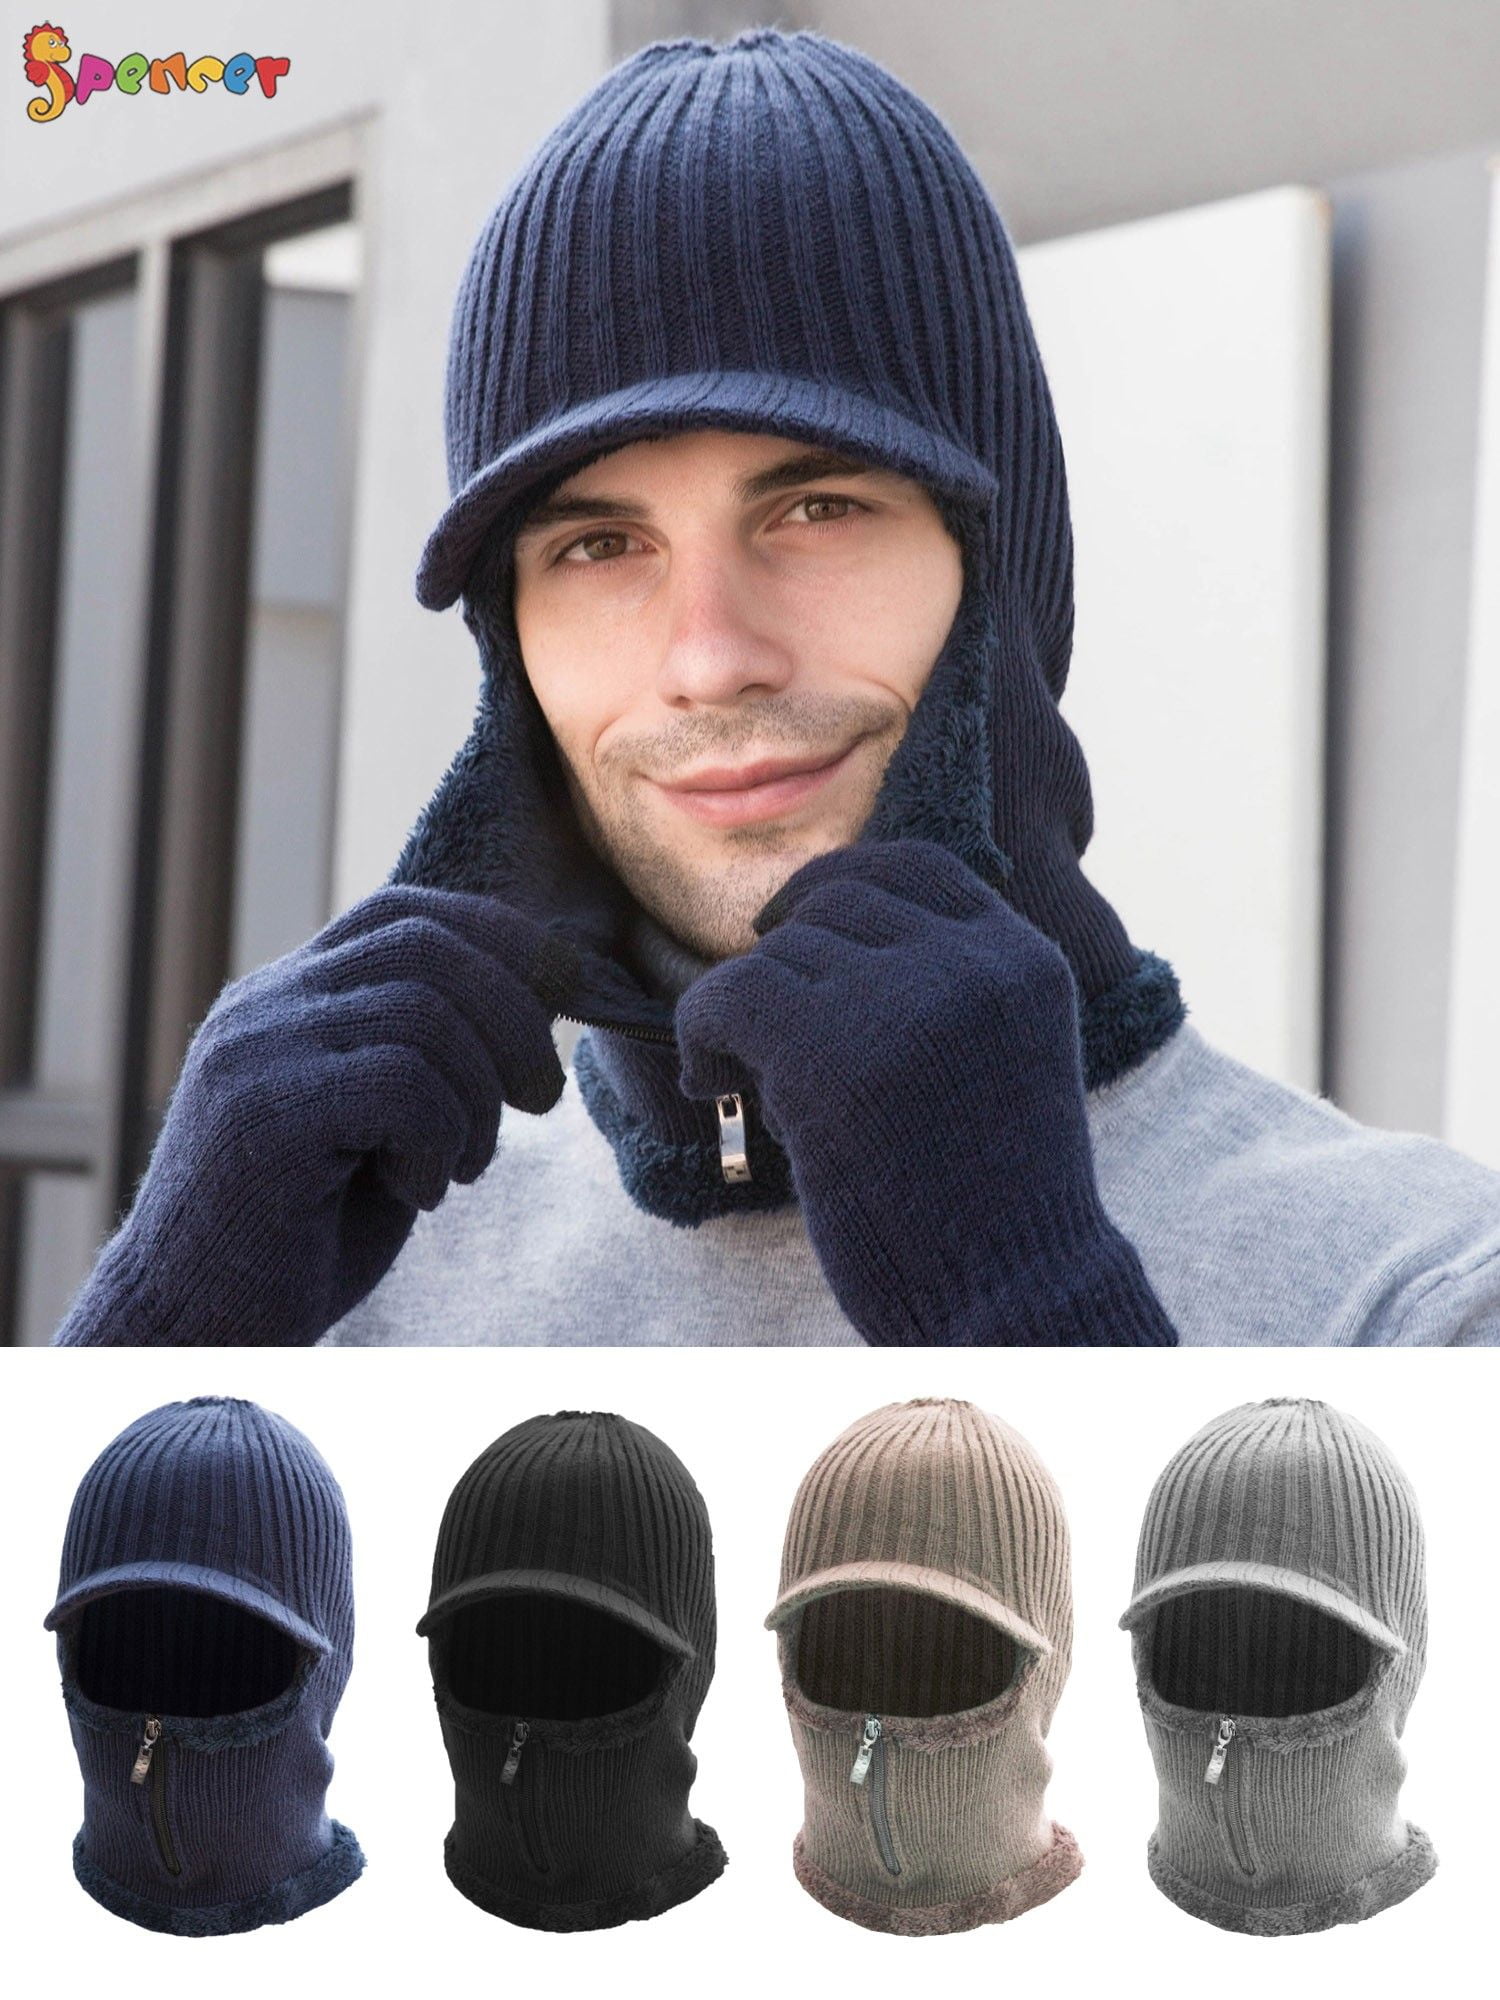 Details about   Black Cold Winter Ski Fleece Skull Caps Beanie Hat Ear Warmer Half Face Mask 